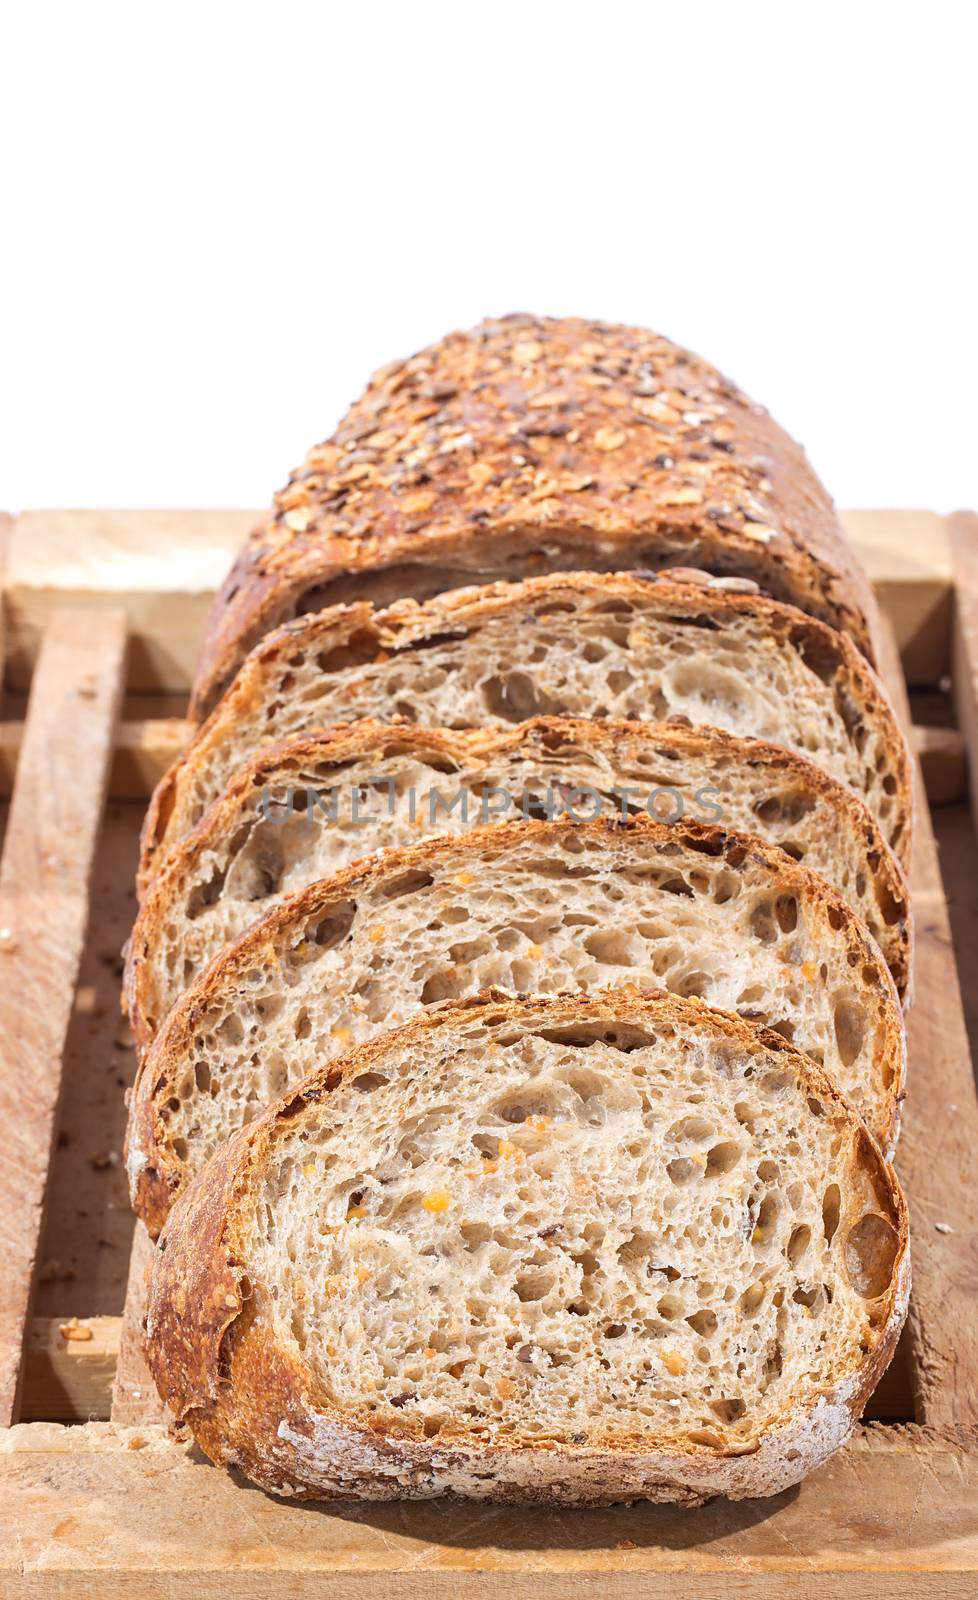 Sliced Whole Grain Bread by milinz